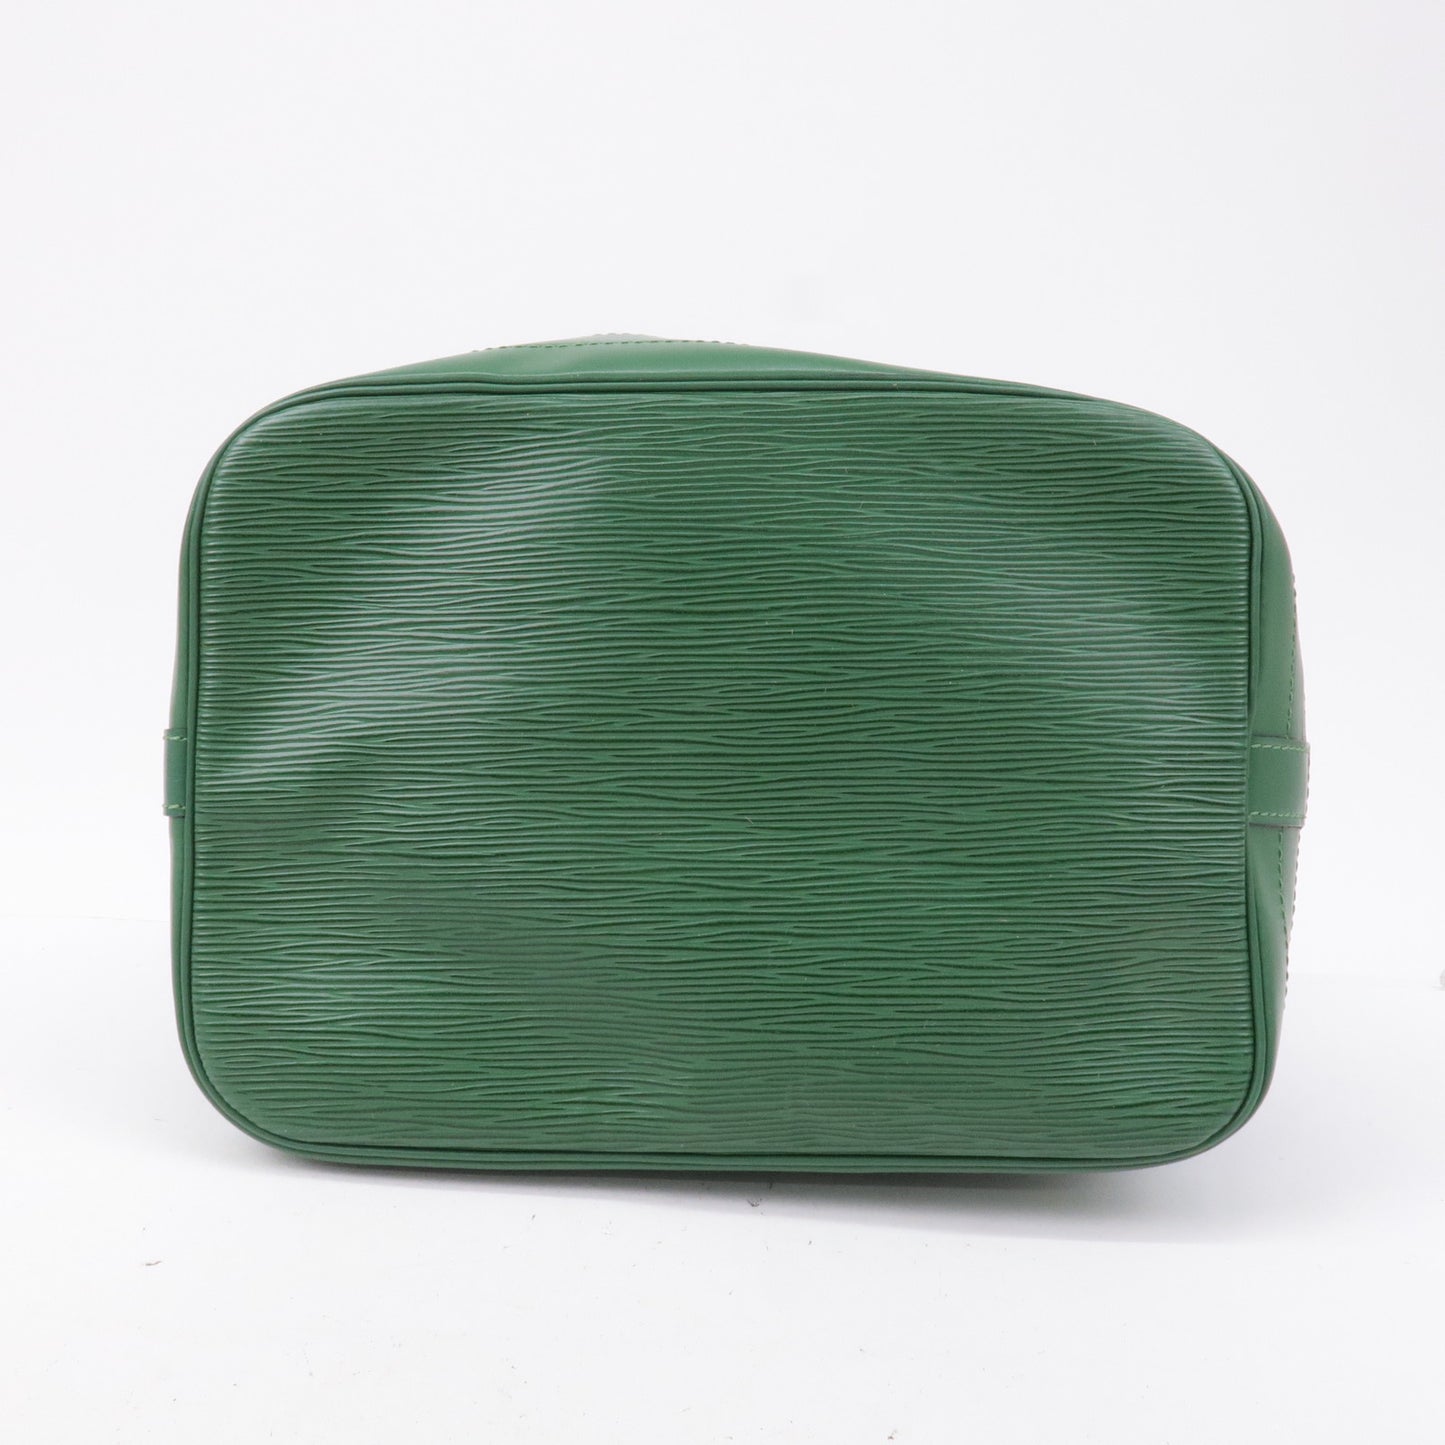 Louis Vuitton Epi Bi-Color Noe Shoulder Bag Blue Green M44044